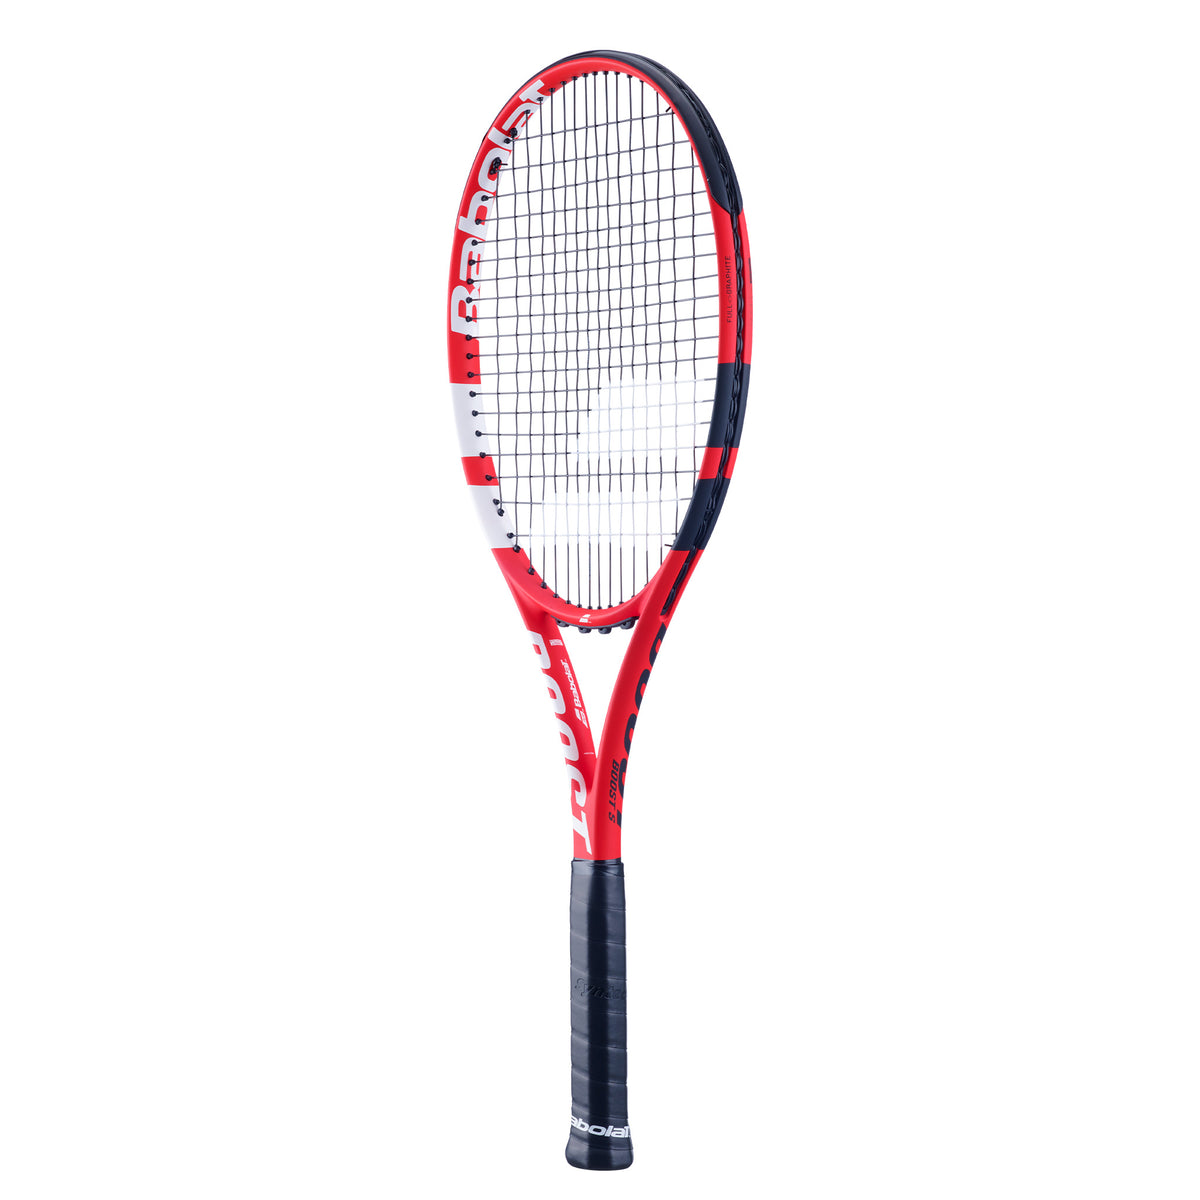 Babolat Boost Strike Tennis Racket